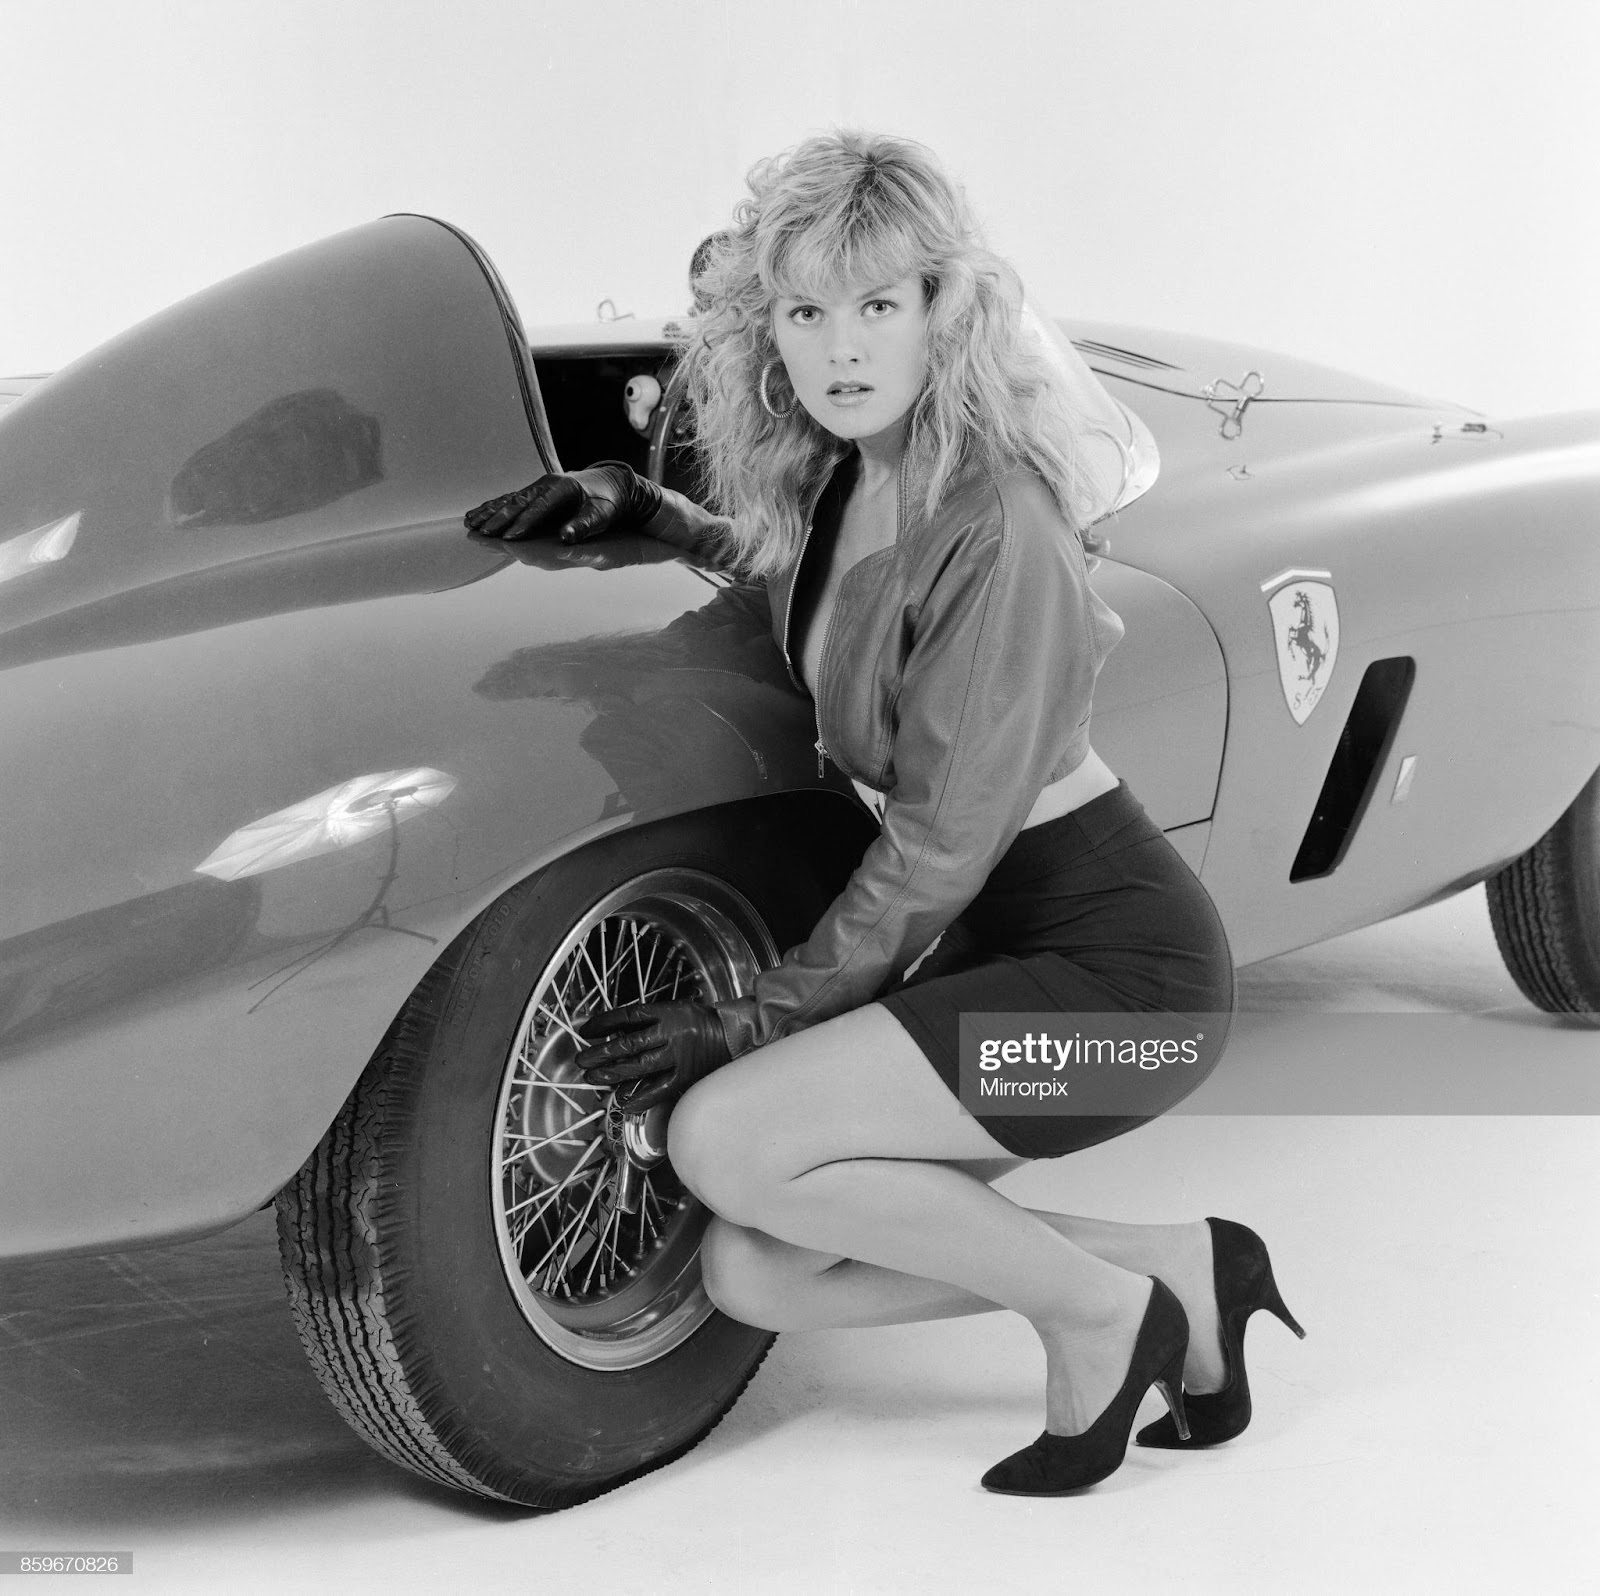 D:\Documenti\posts\posts\Women and motorsport\foto\1988\glamour-model-caroline-delahunty-poses-next-to-a-ferrari-19th-april-picture-id859670826.jpg